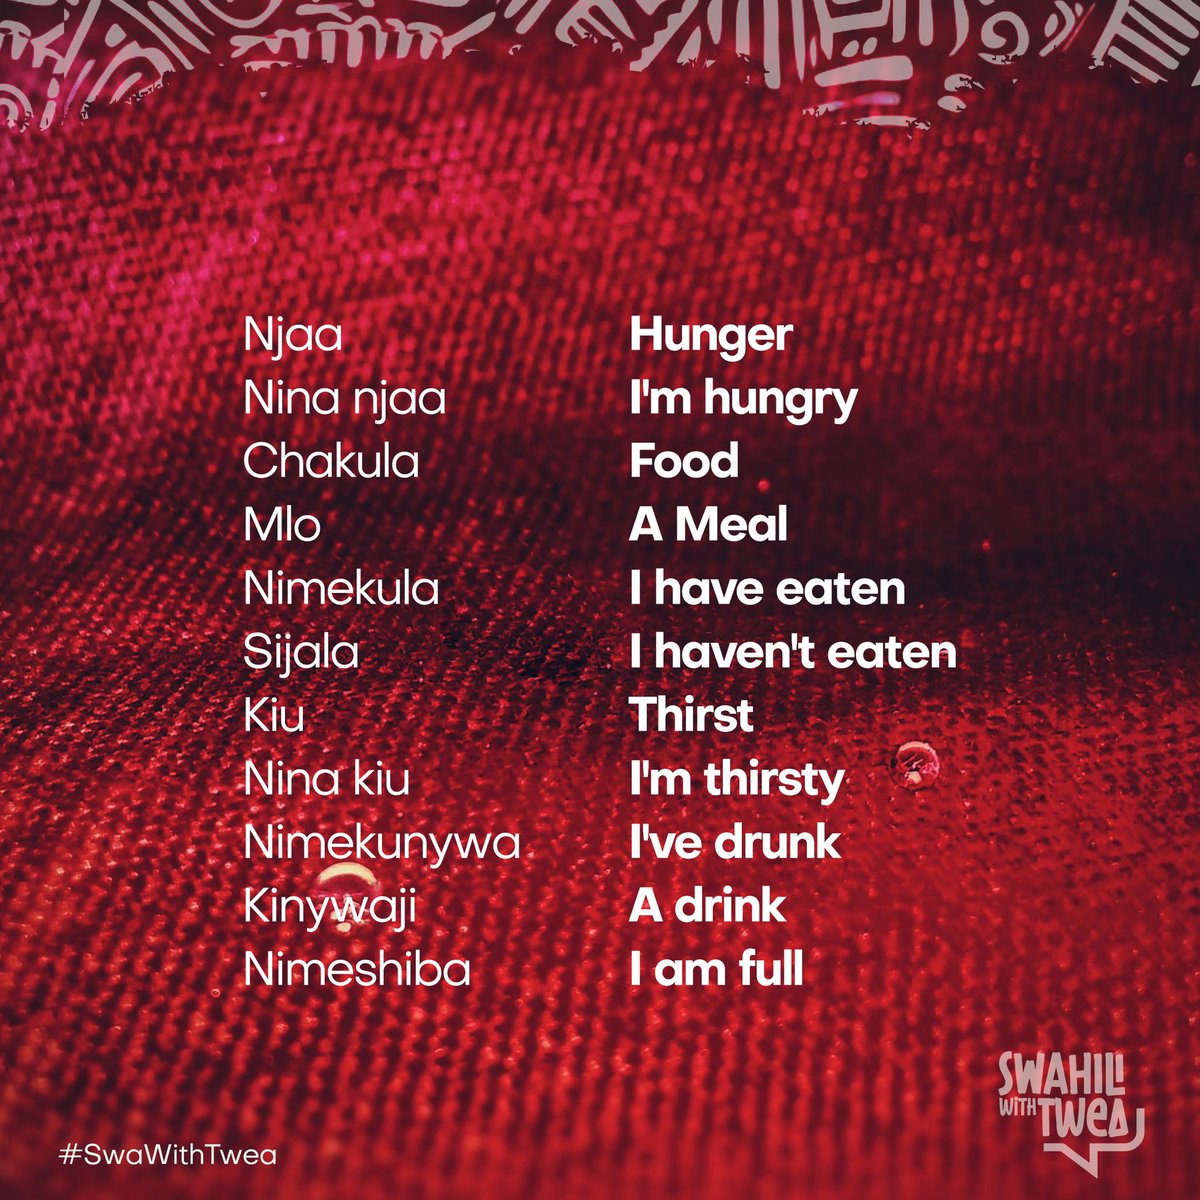 Hamjambo 
Expand your  #Swahili diction
#SwaWithTwea